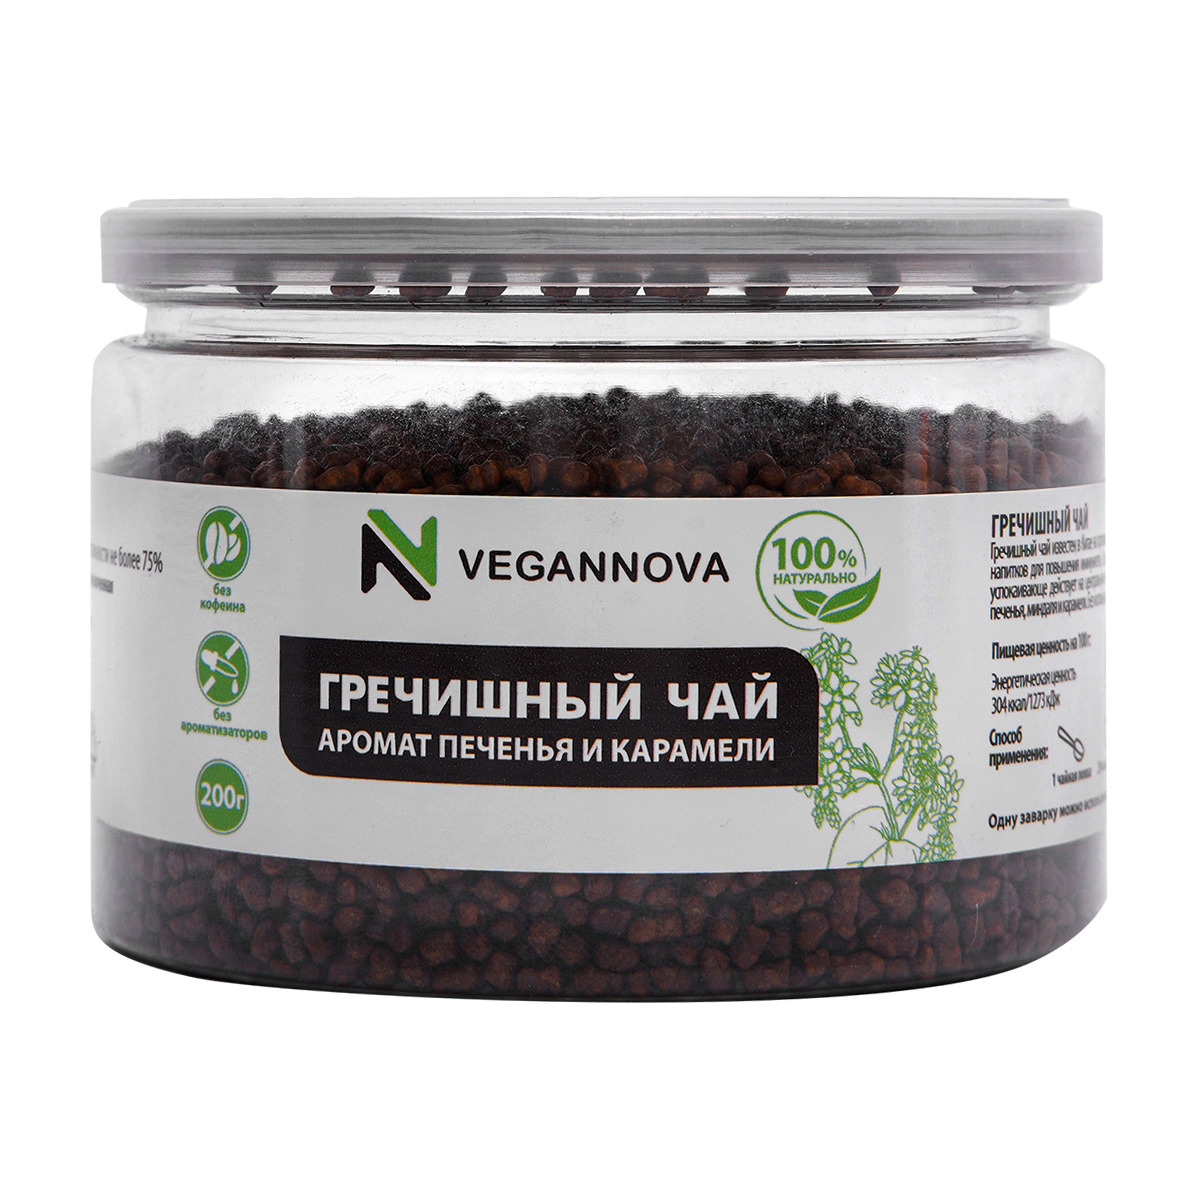 Гречишный чай VeganNova (200 г)